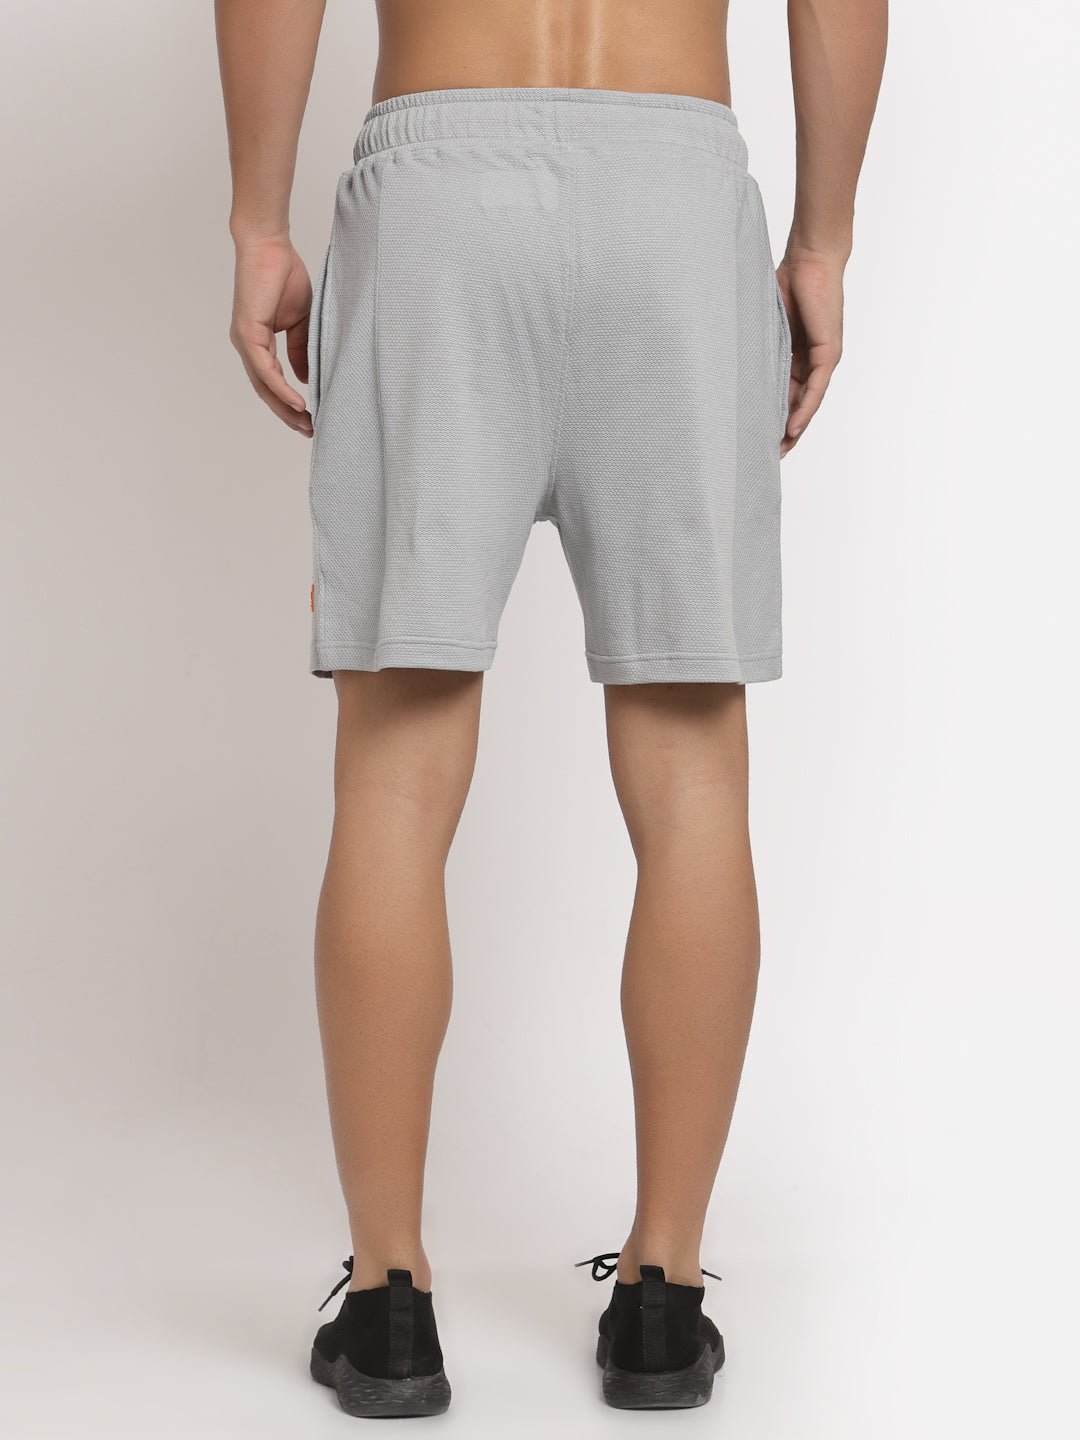 Light Grey Shorts - clubyork